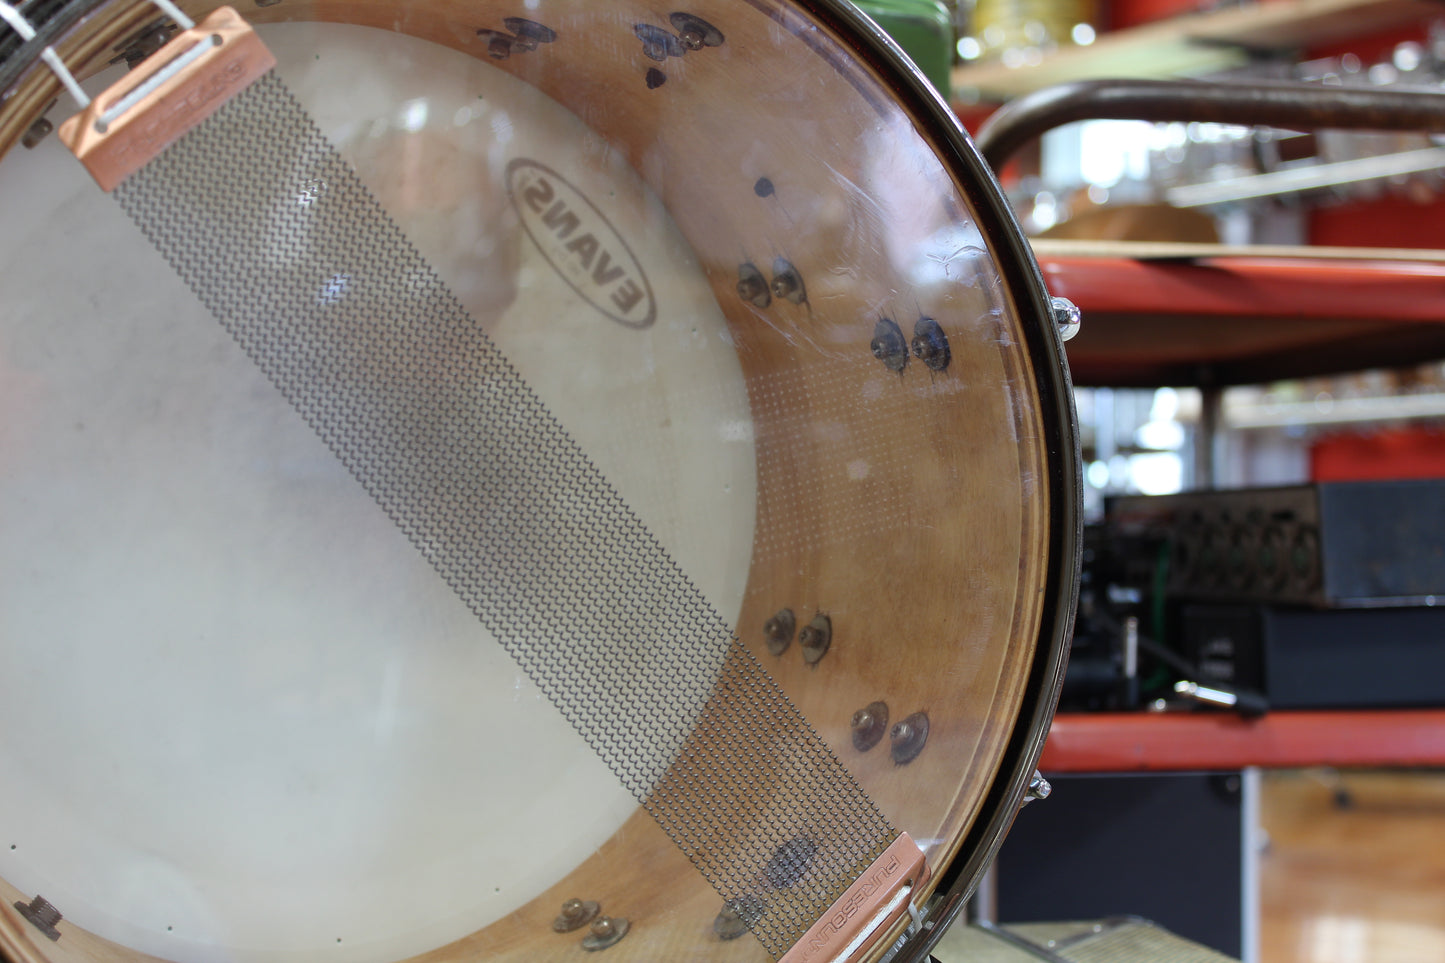 00s Orange County 7X13 Snare Drum in Red Glitter